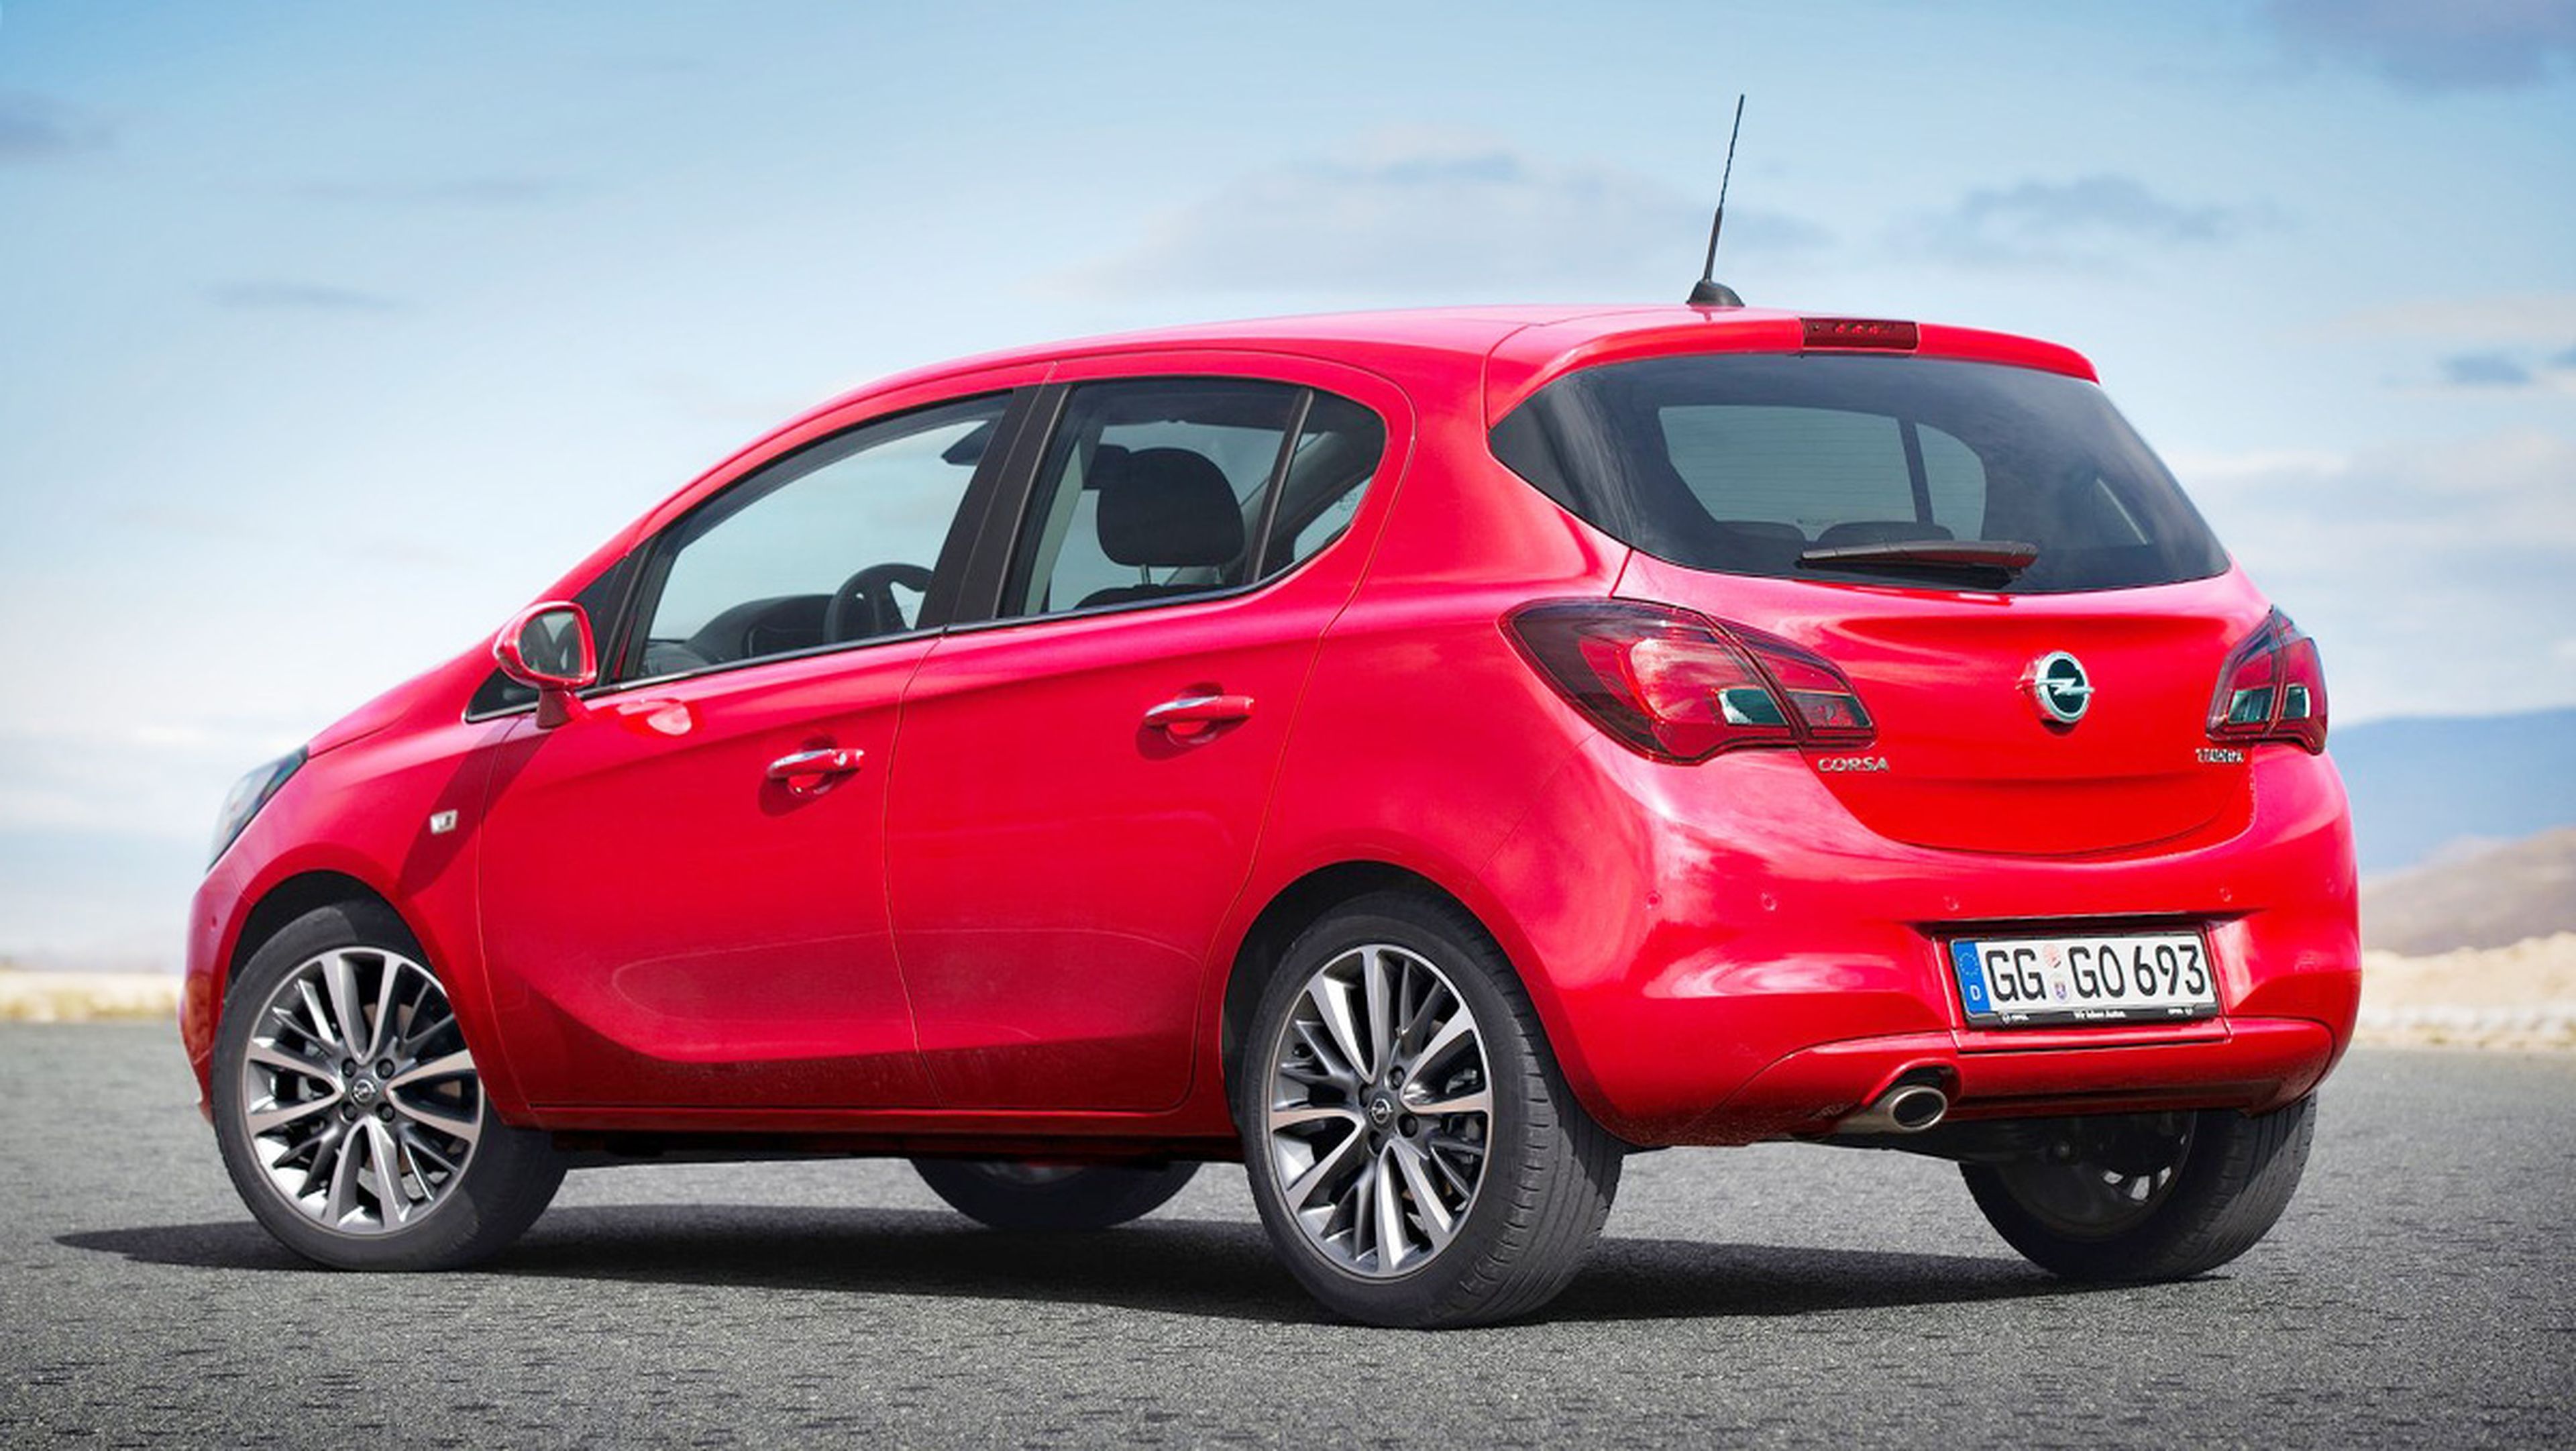 Coches nuevos entre 6.000 y 9.000 euros - Opel Corsa